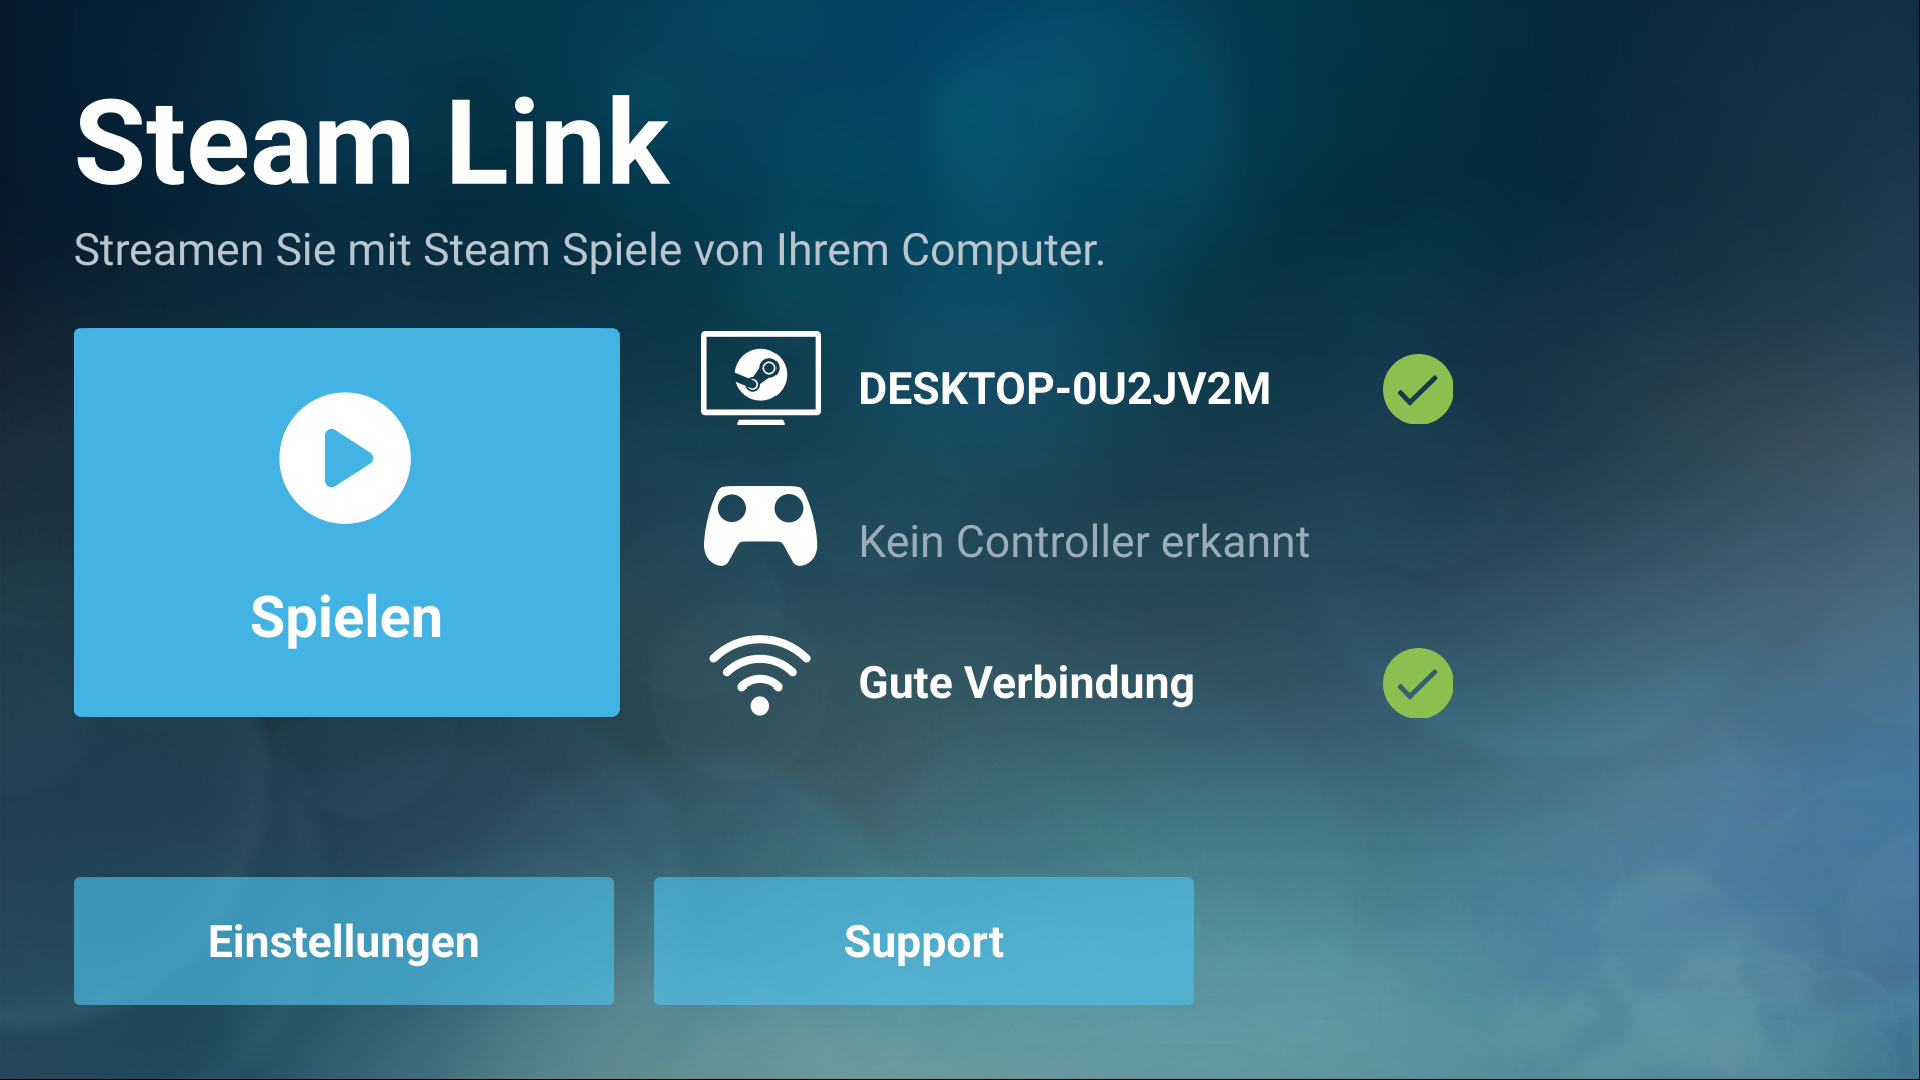 steam link apk download